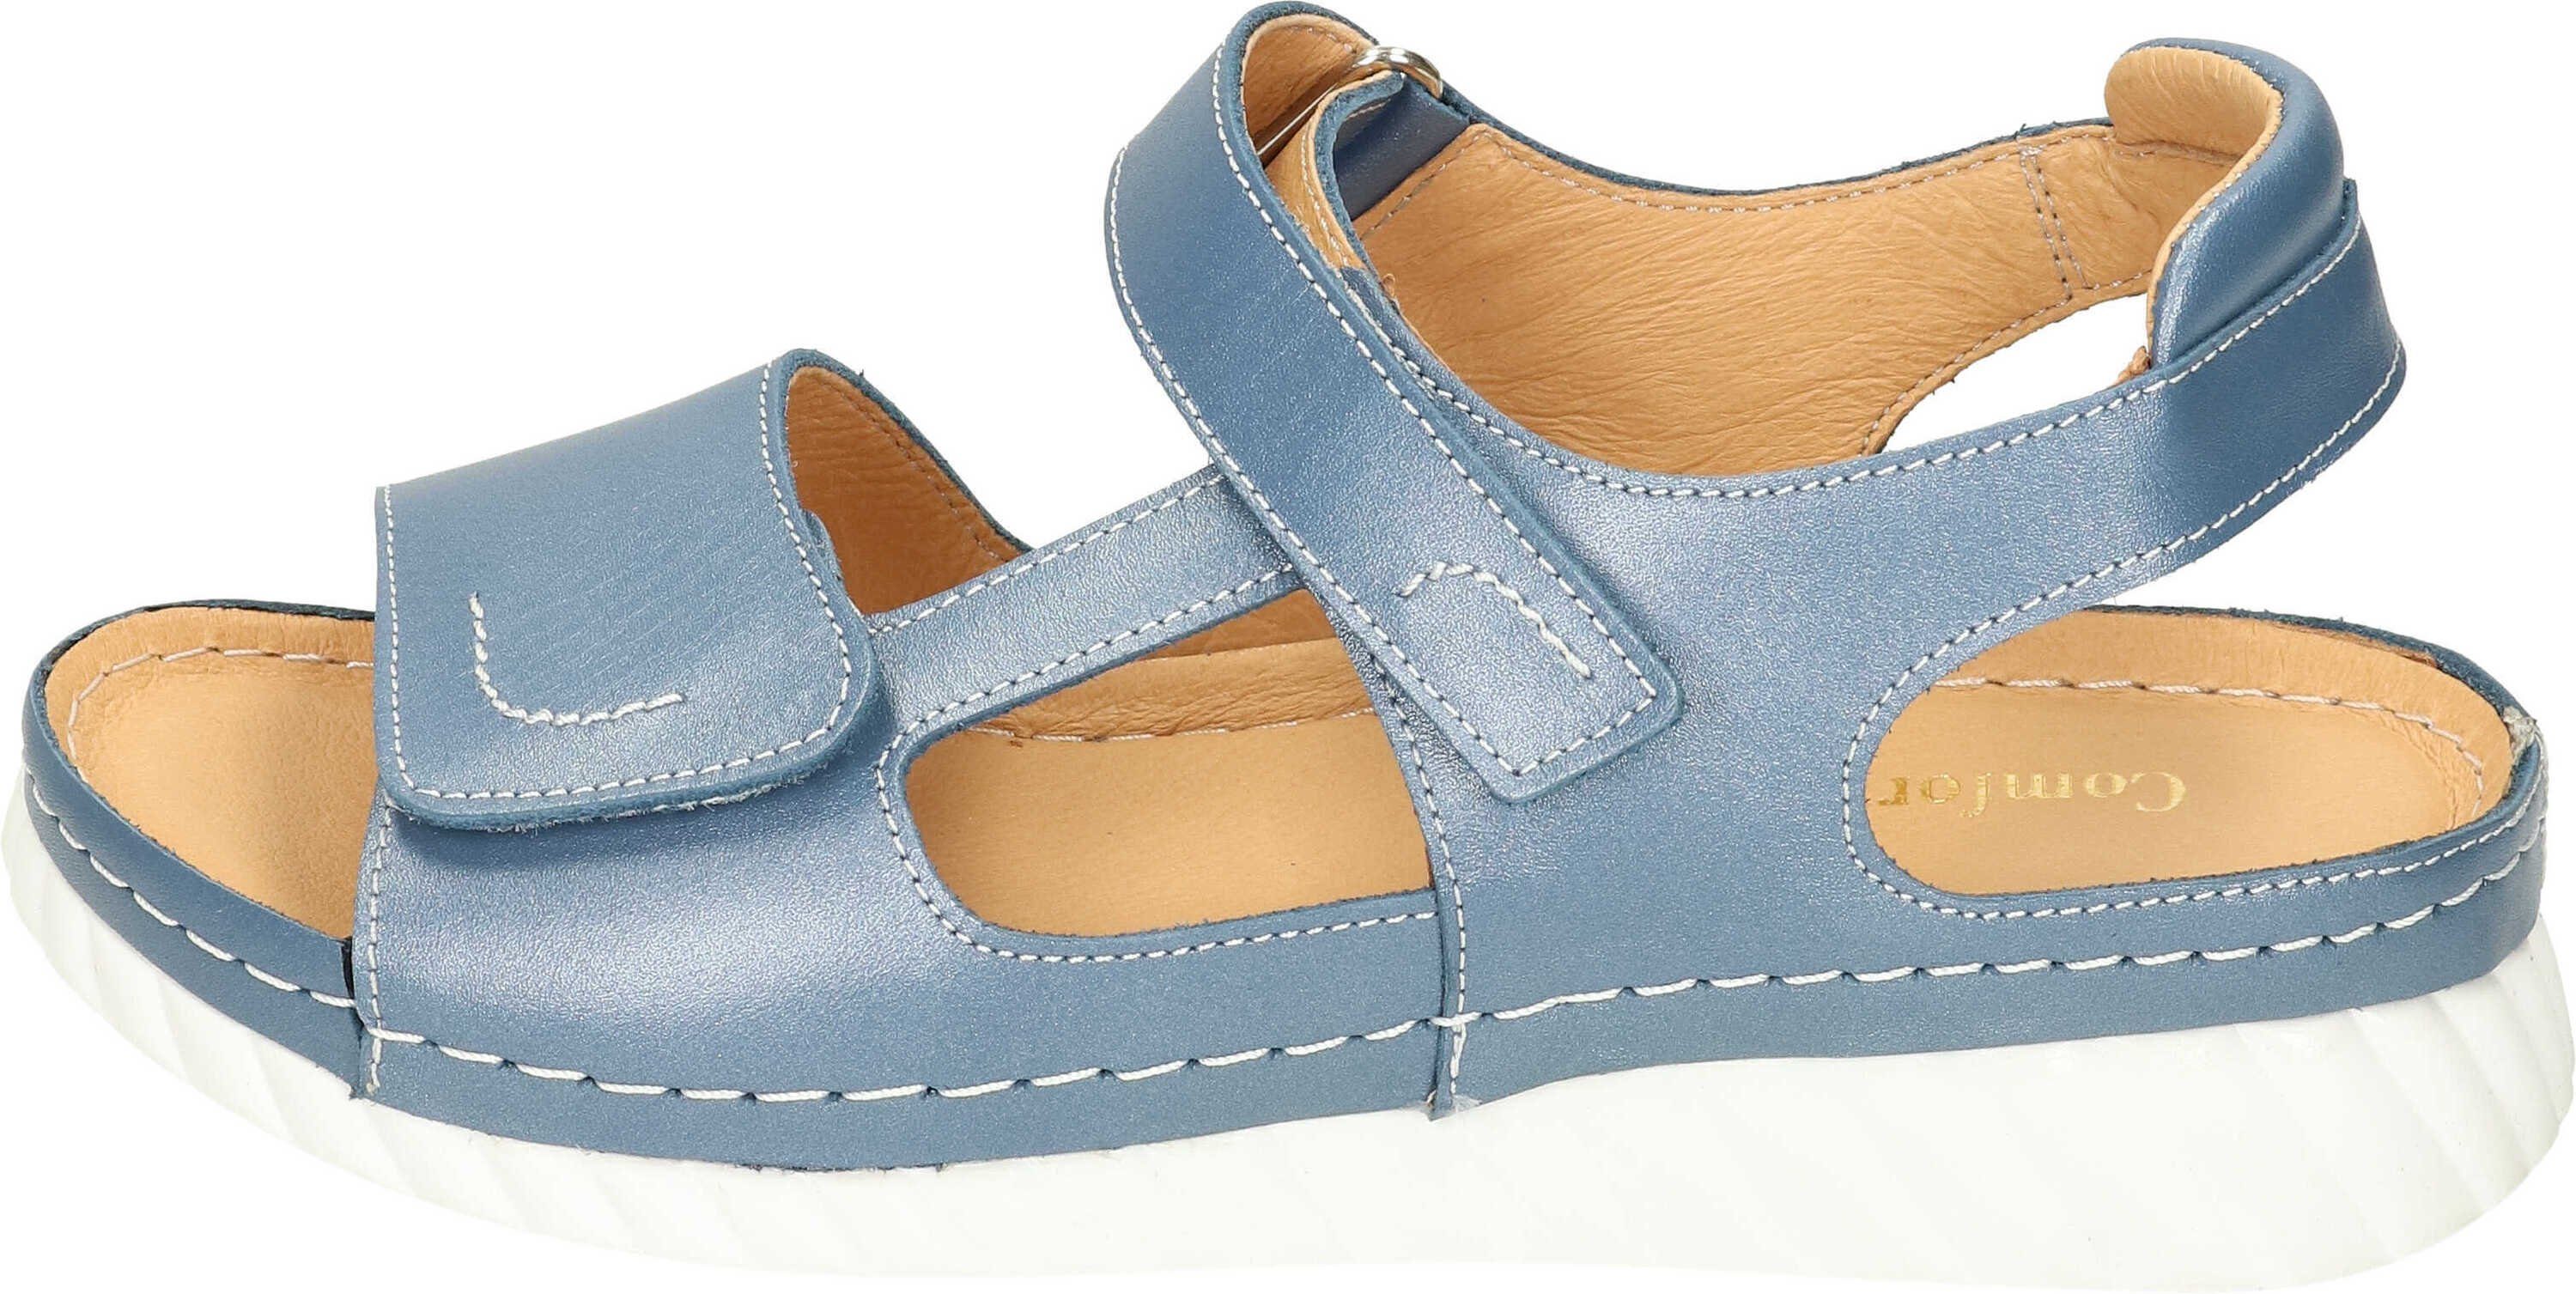 Sandaletten aus Leder blau Sandalette echtem Comfortabel